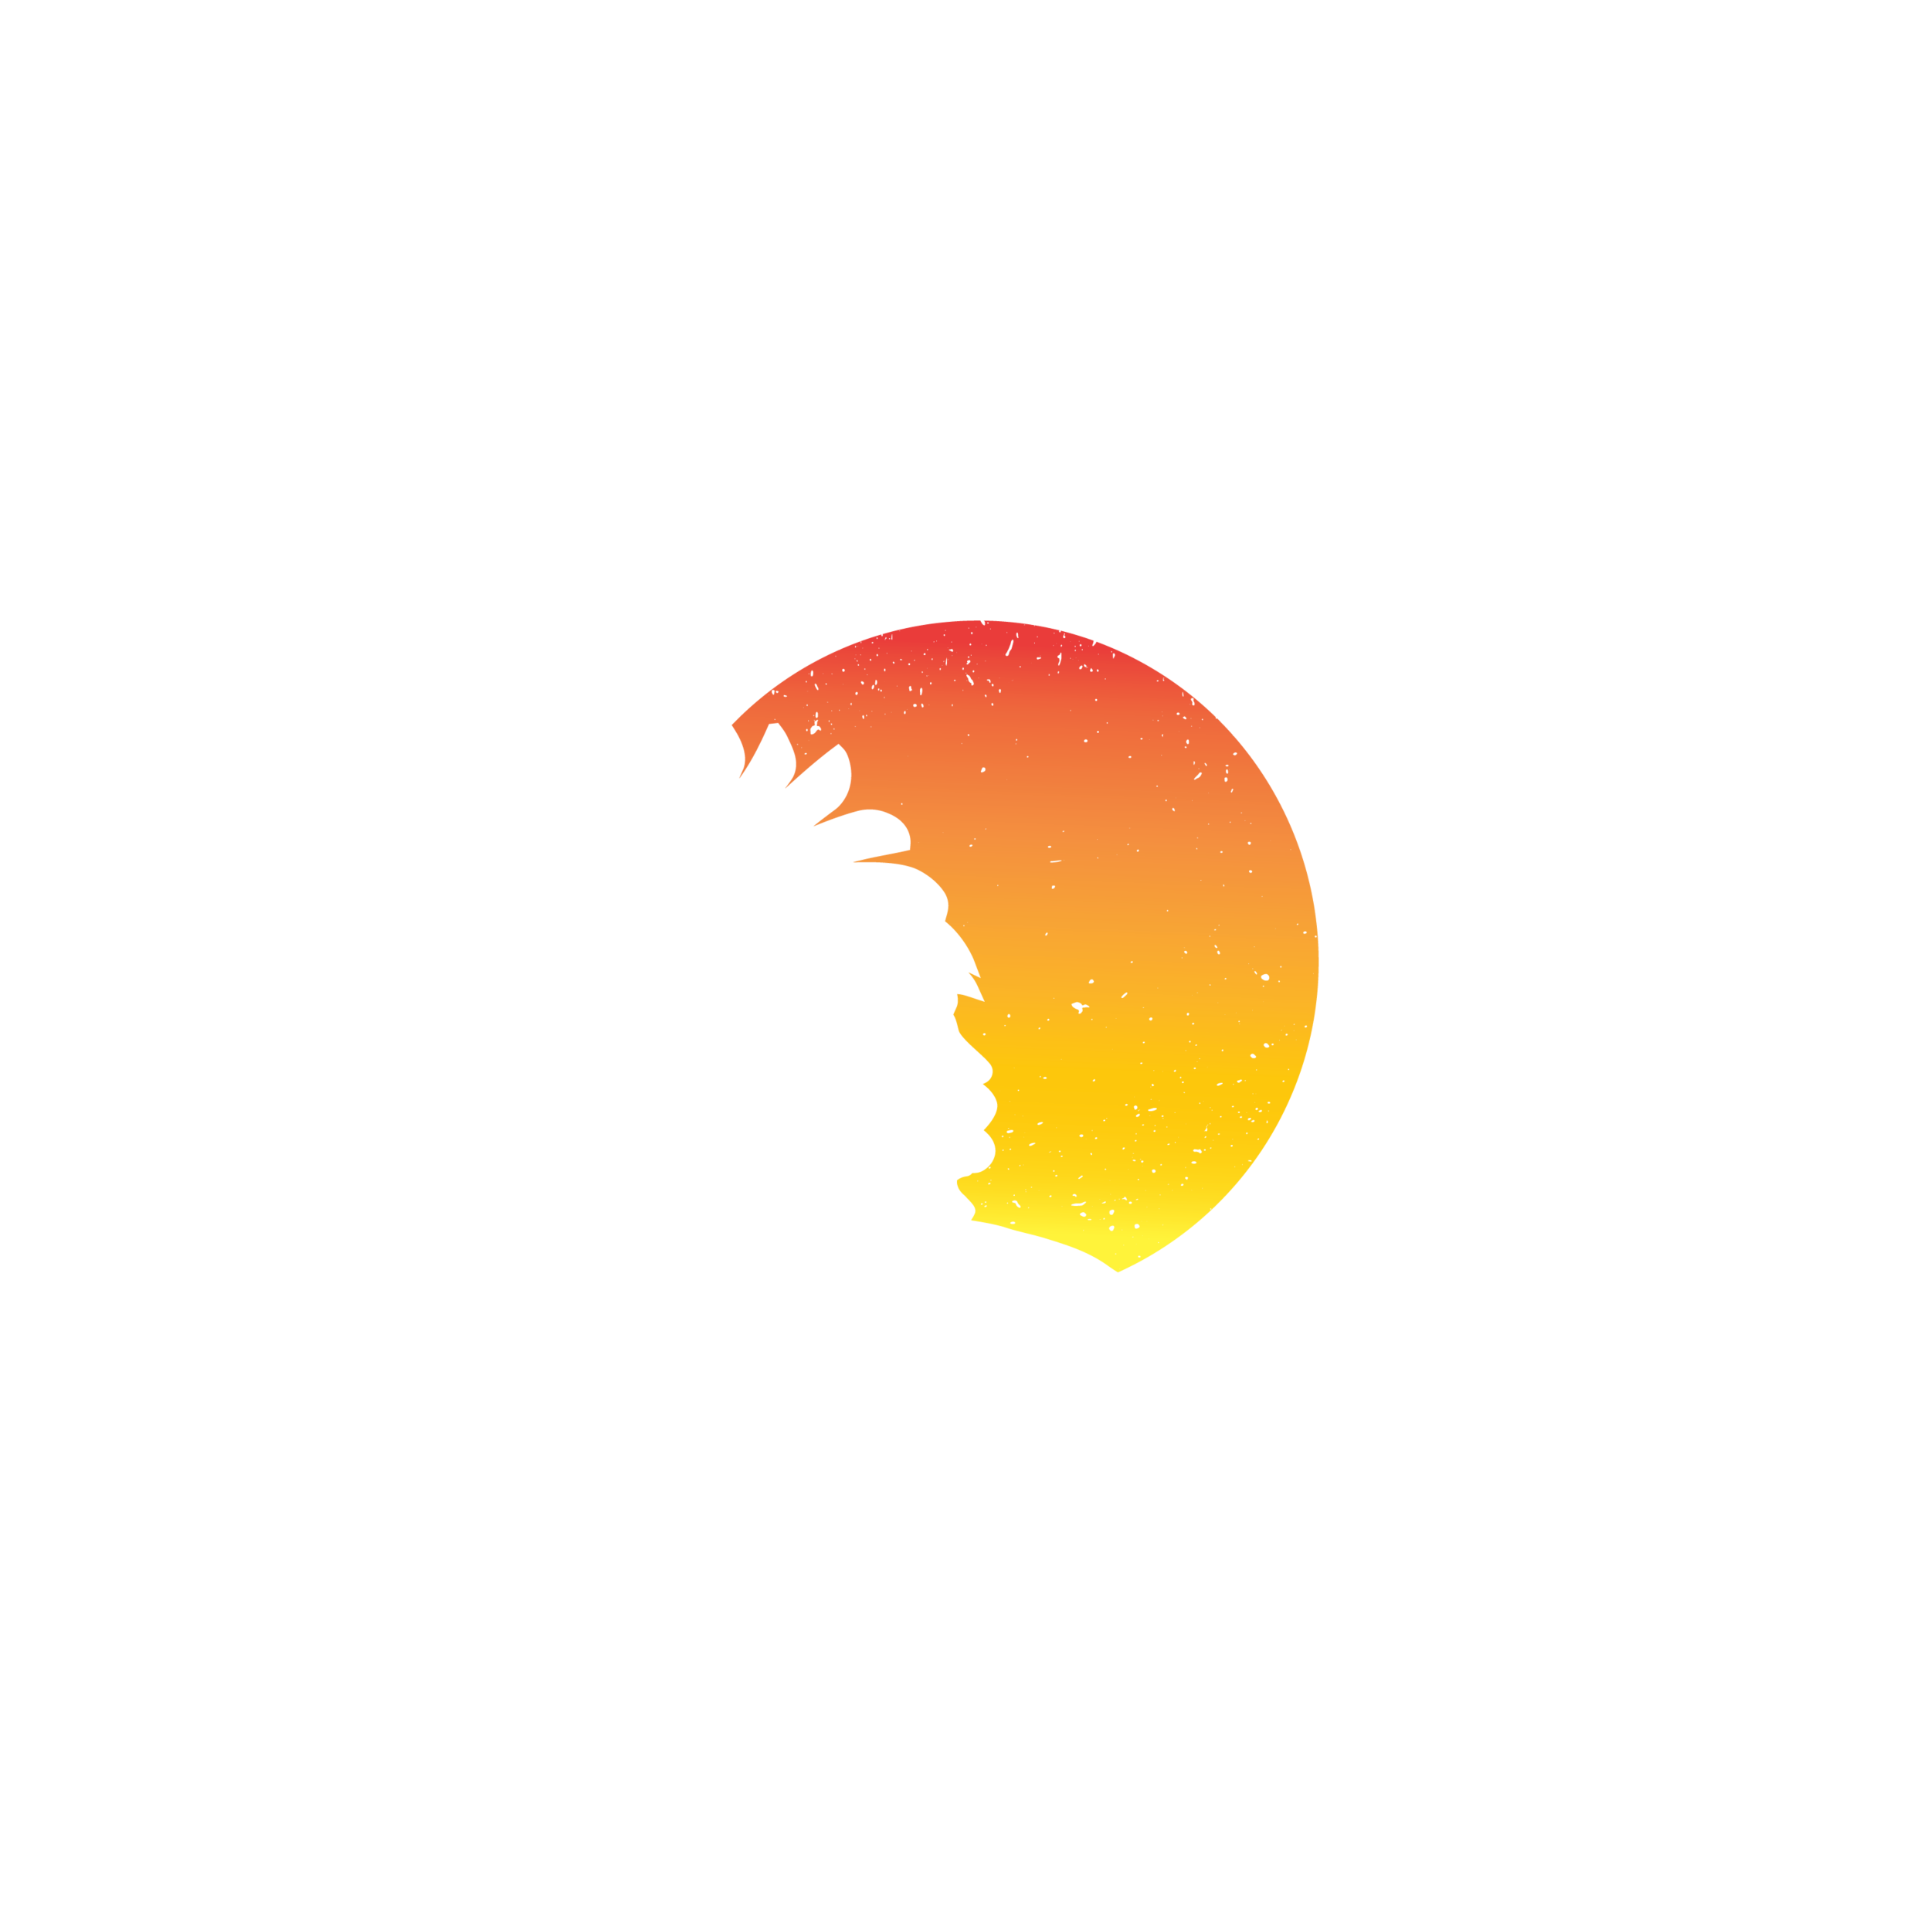 Camp George CSA